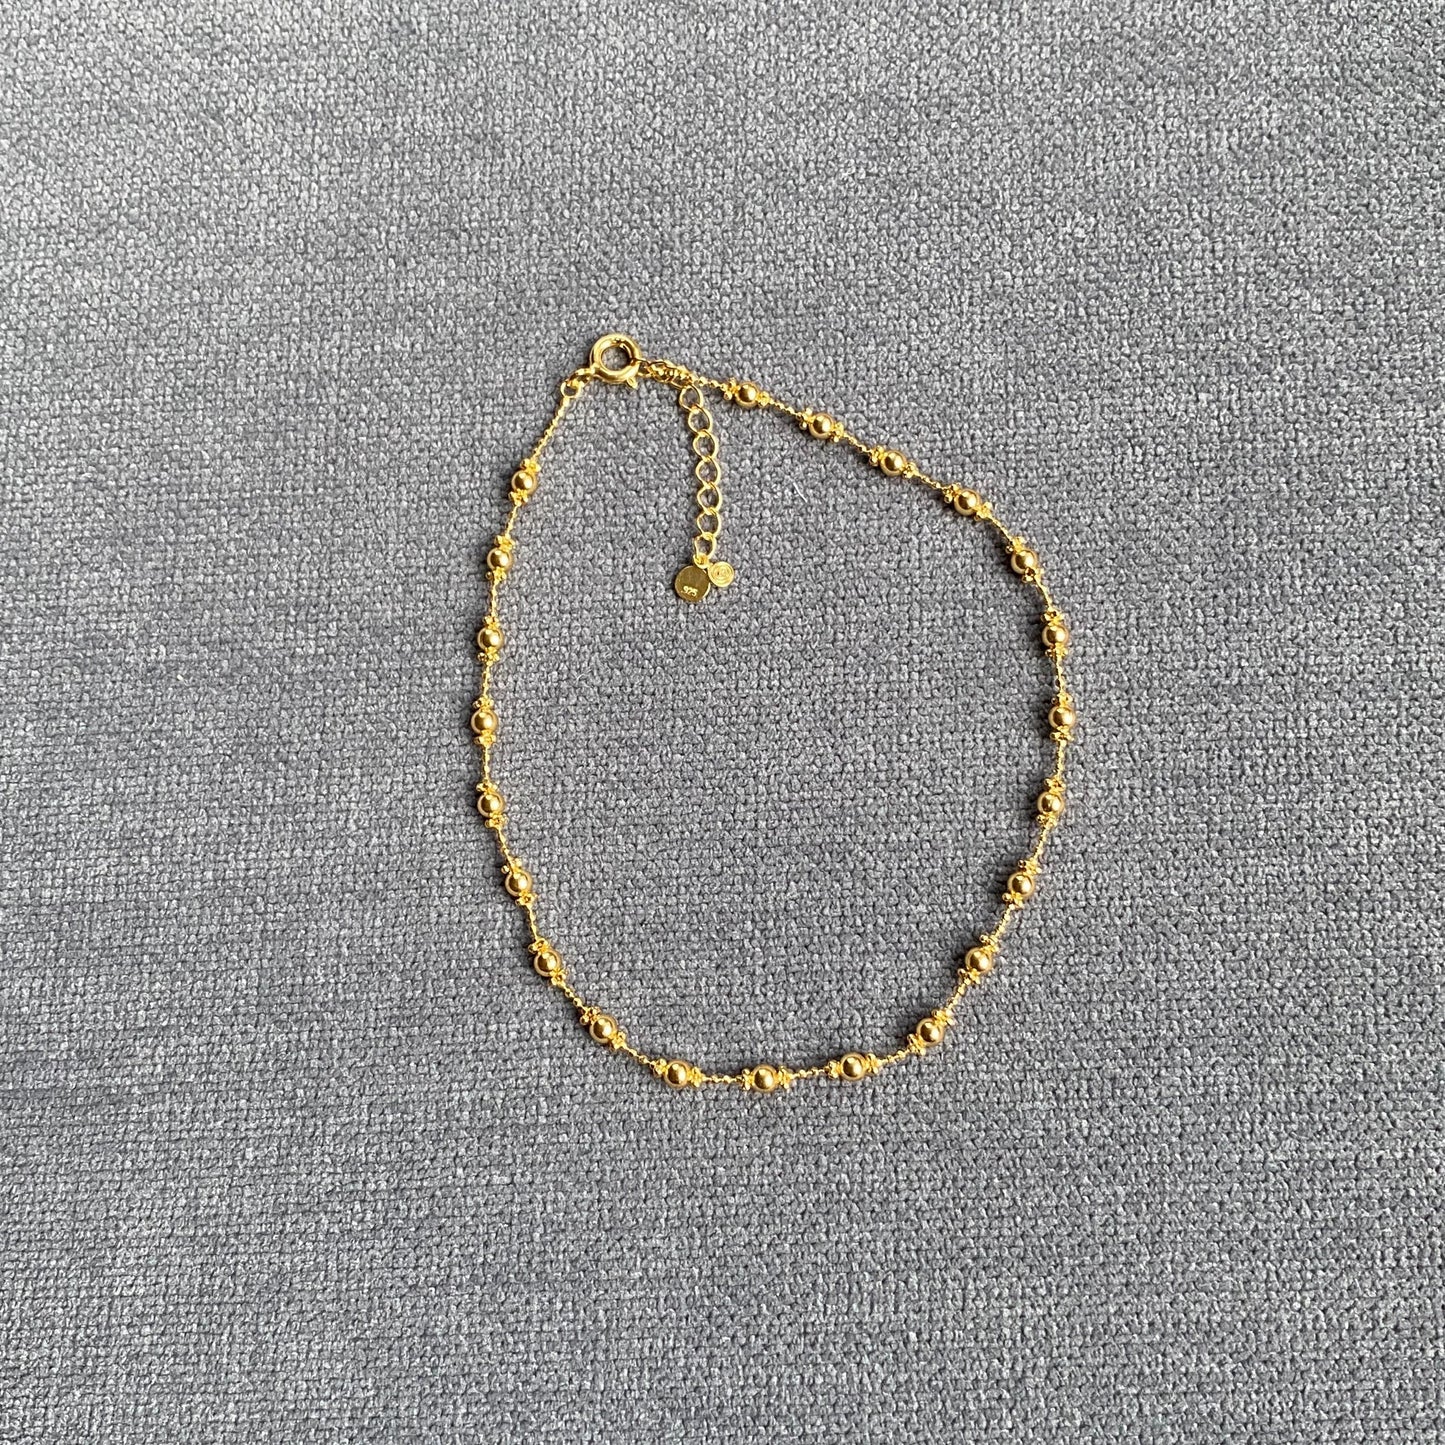 Epi Bracelet/Anklet single strand